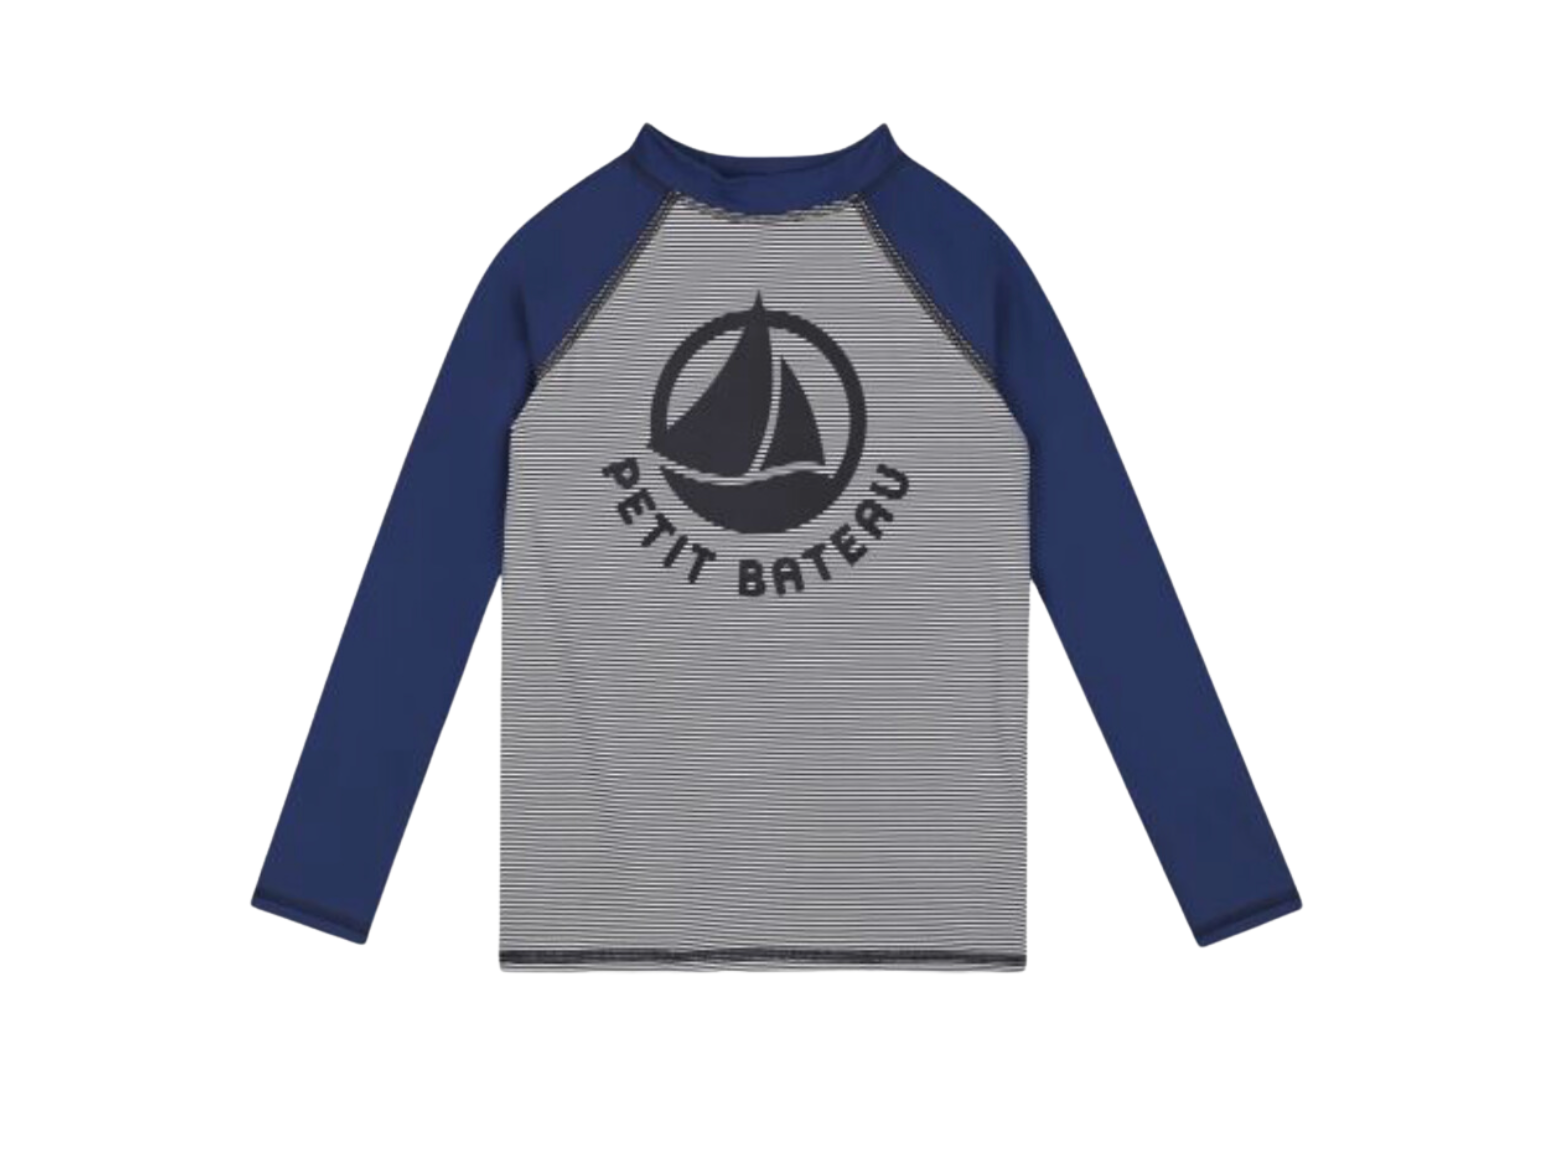 PETIT BATEAU - T-shirt anti UV bleu marine - 4 ans